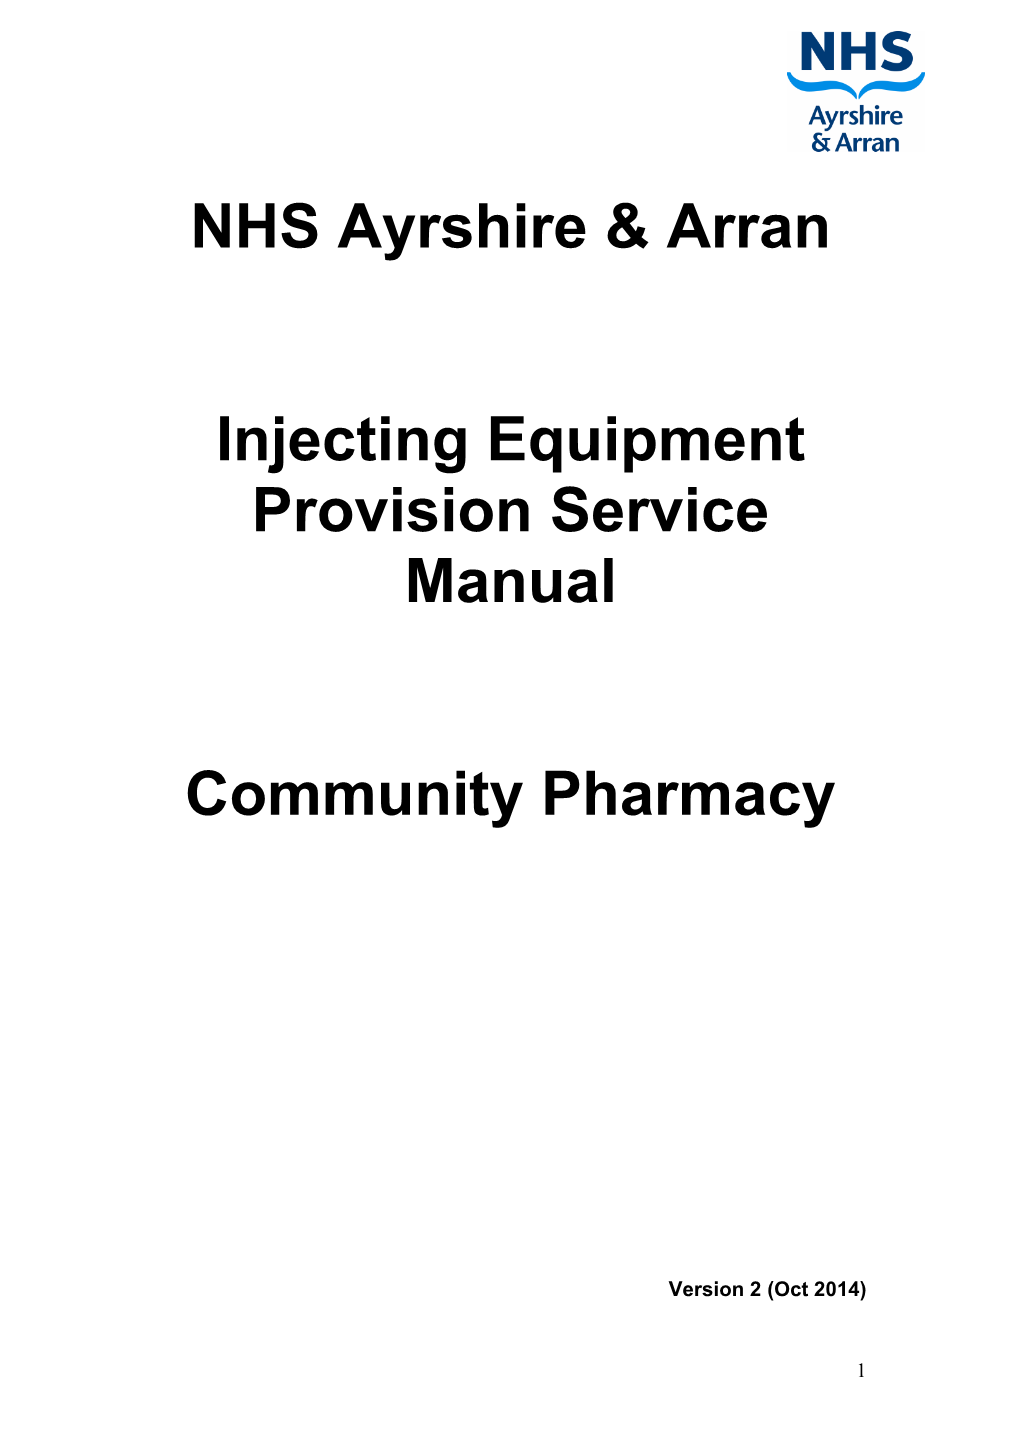 NHS Ayrshire & Arran Injecting Equipment Provision Service Manual Community Pharmacy